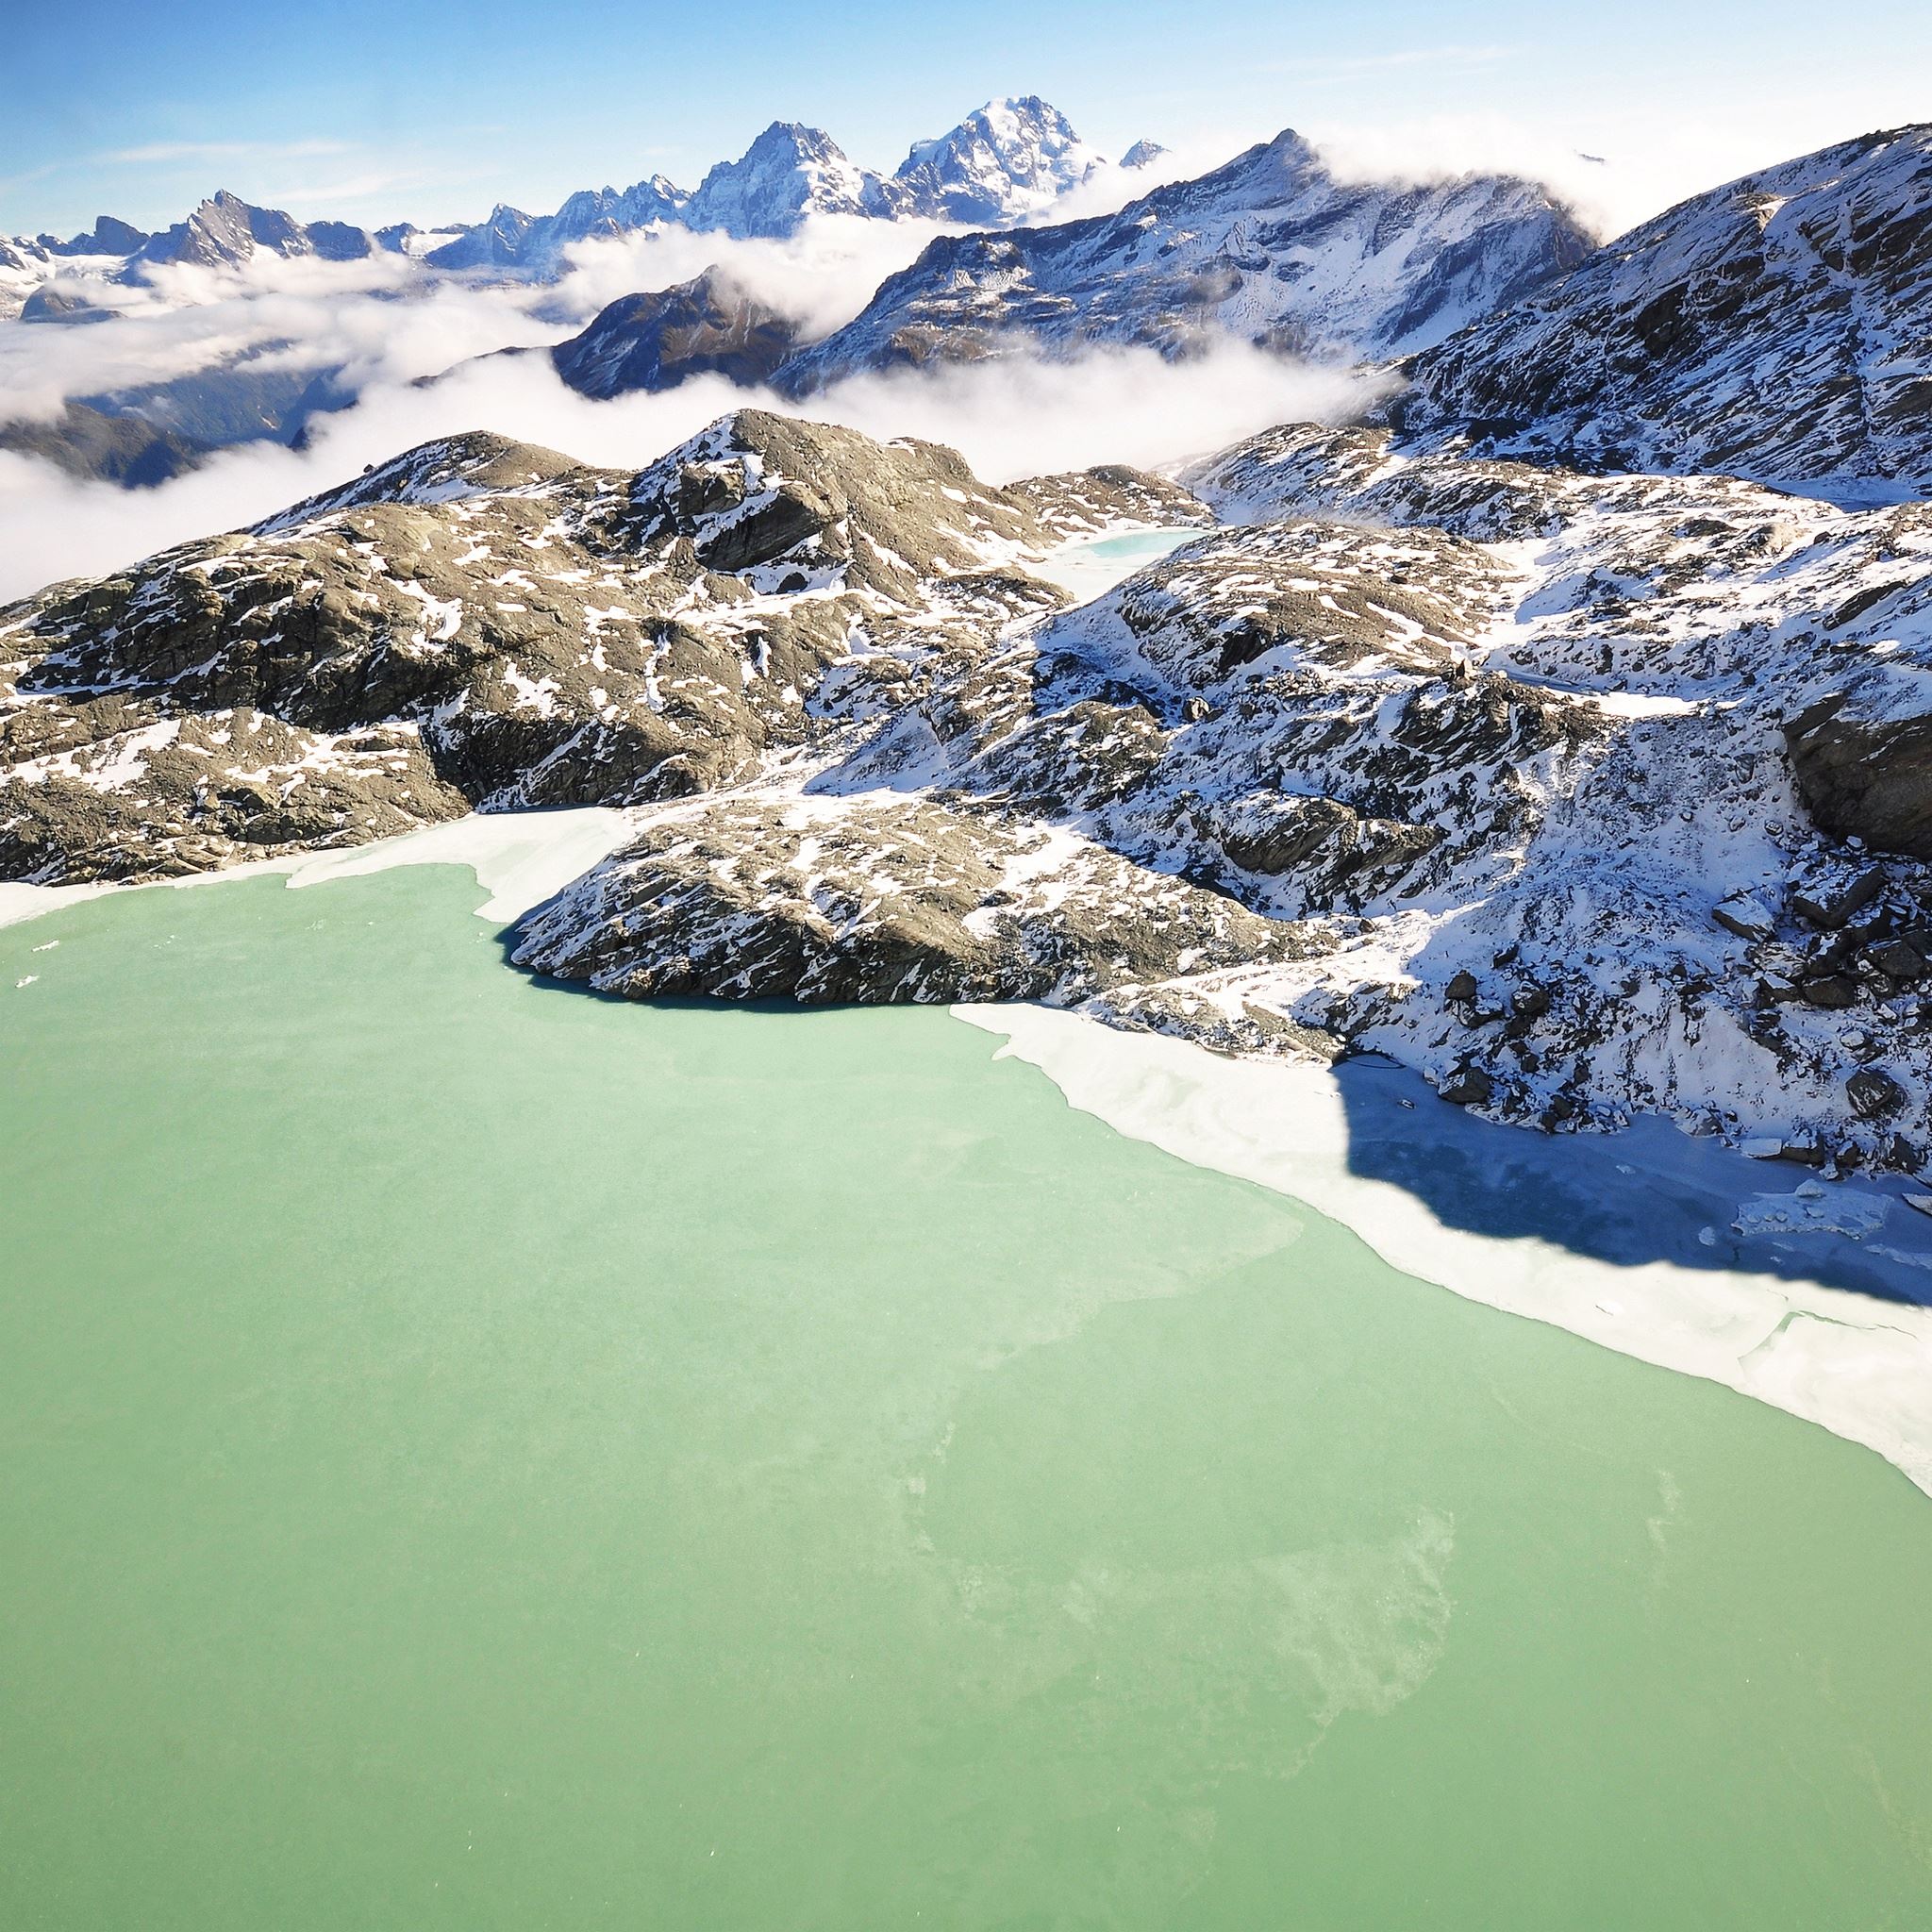 Snow Mountain Peaks And Lake iPad Air wallpaper 